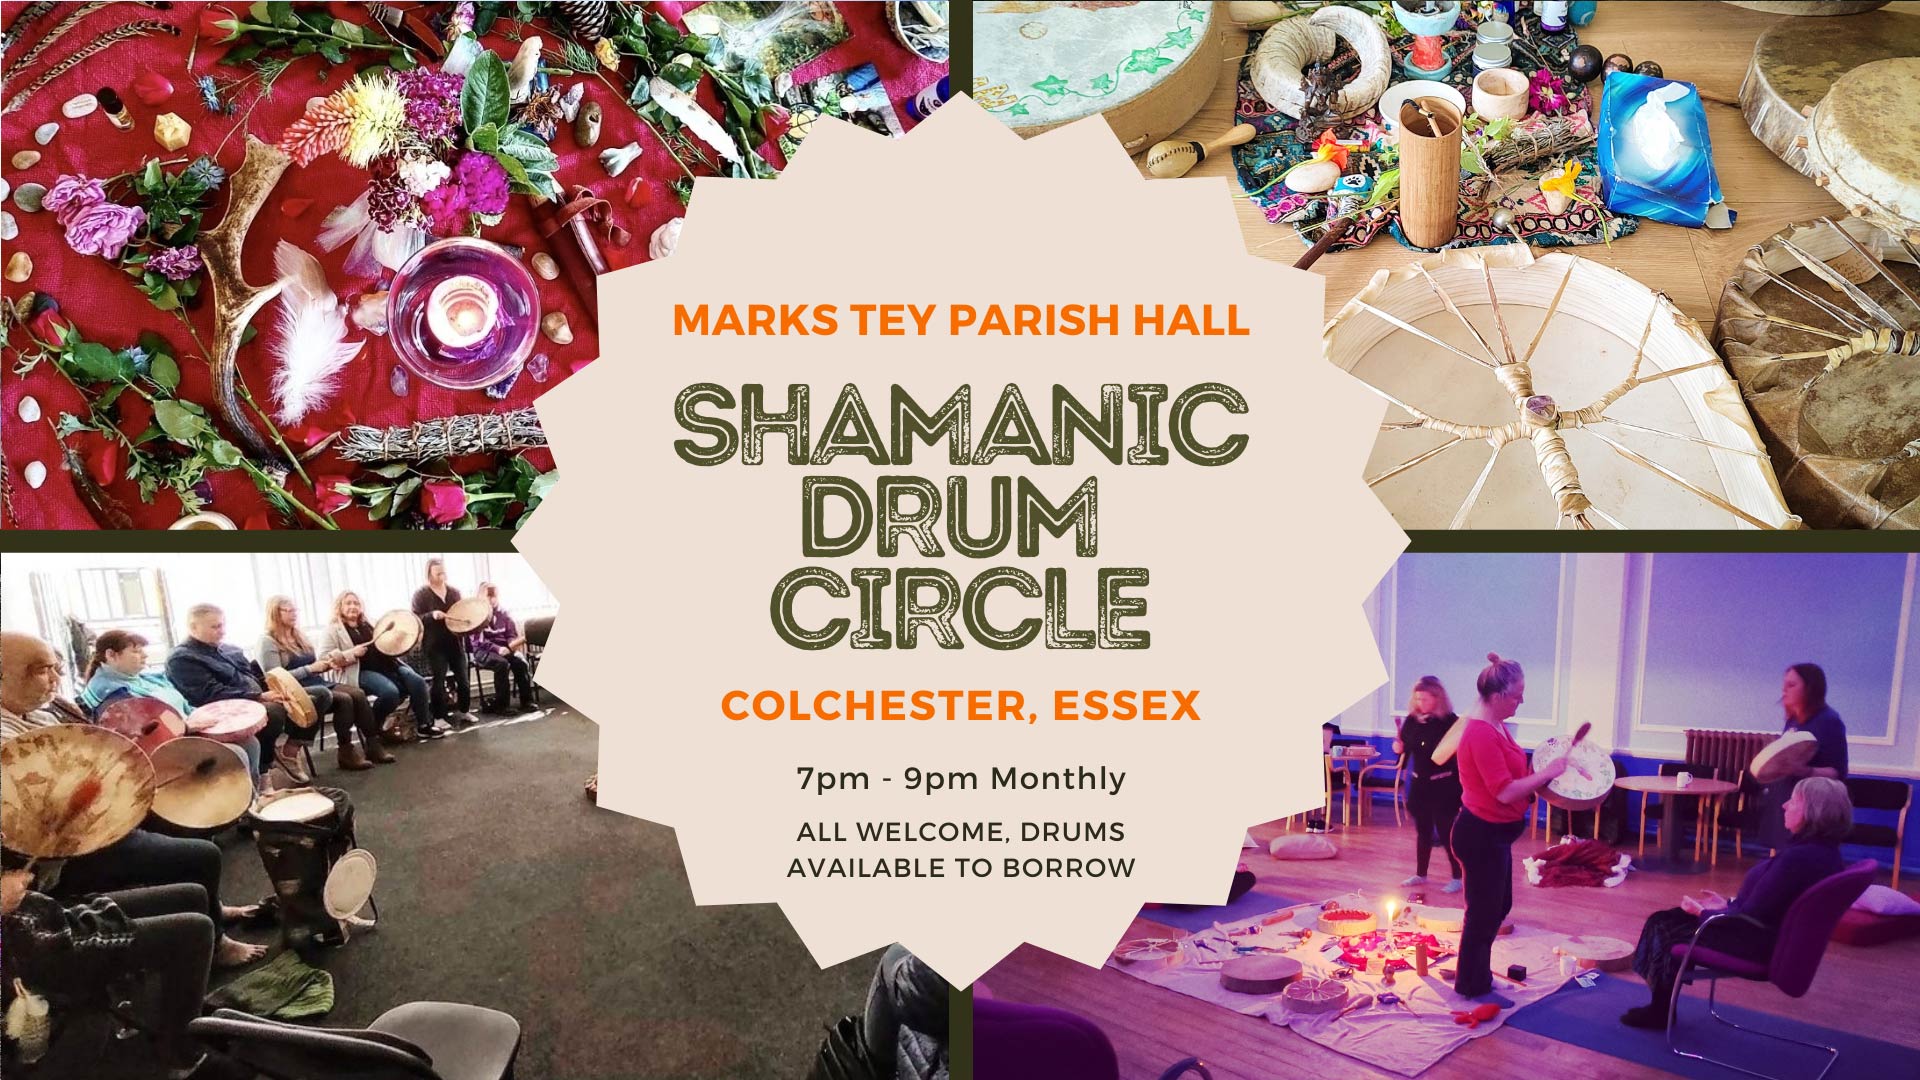 TheDrumWoman-ShamanicDrumCircle-Marks-Tey-Parish-Hall-Colchester-Essex